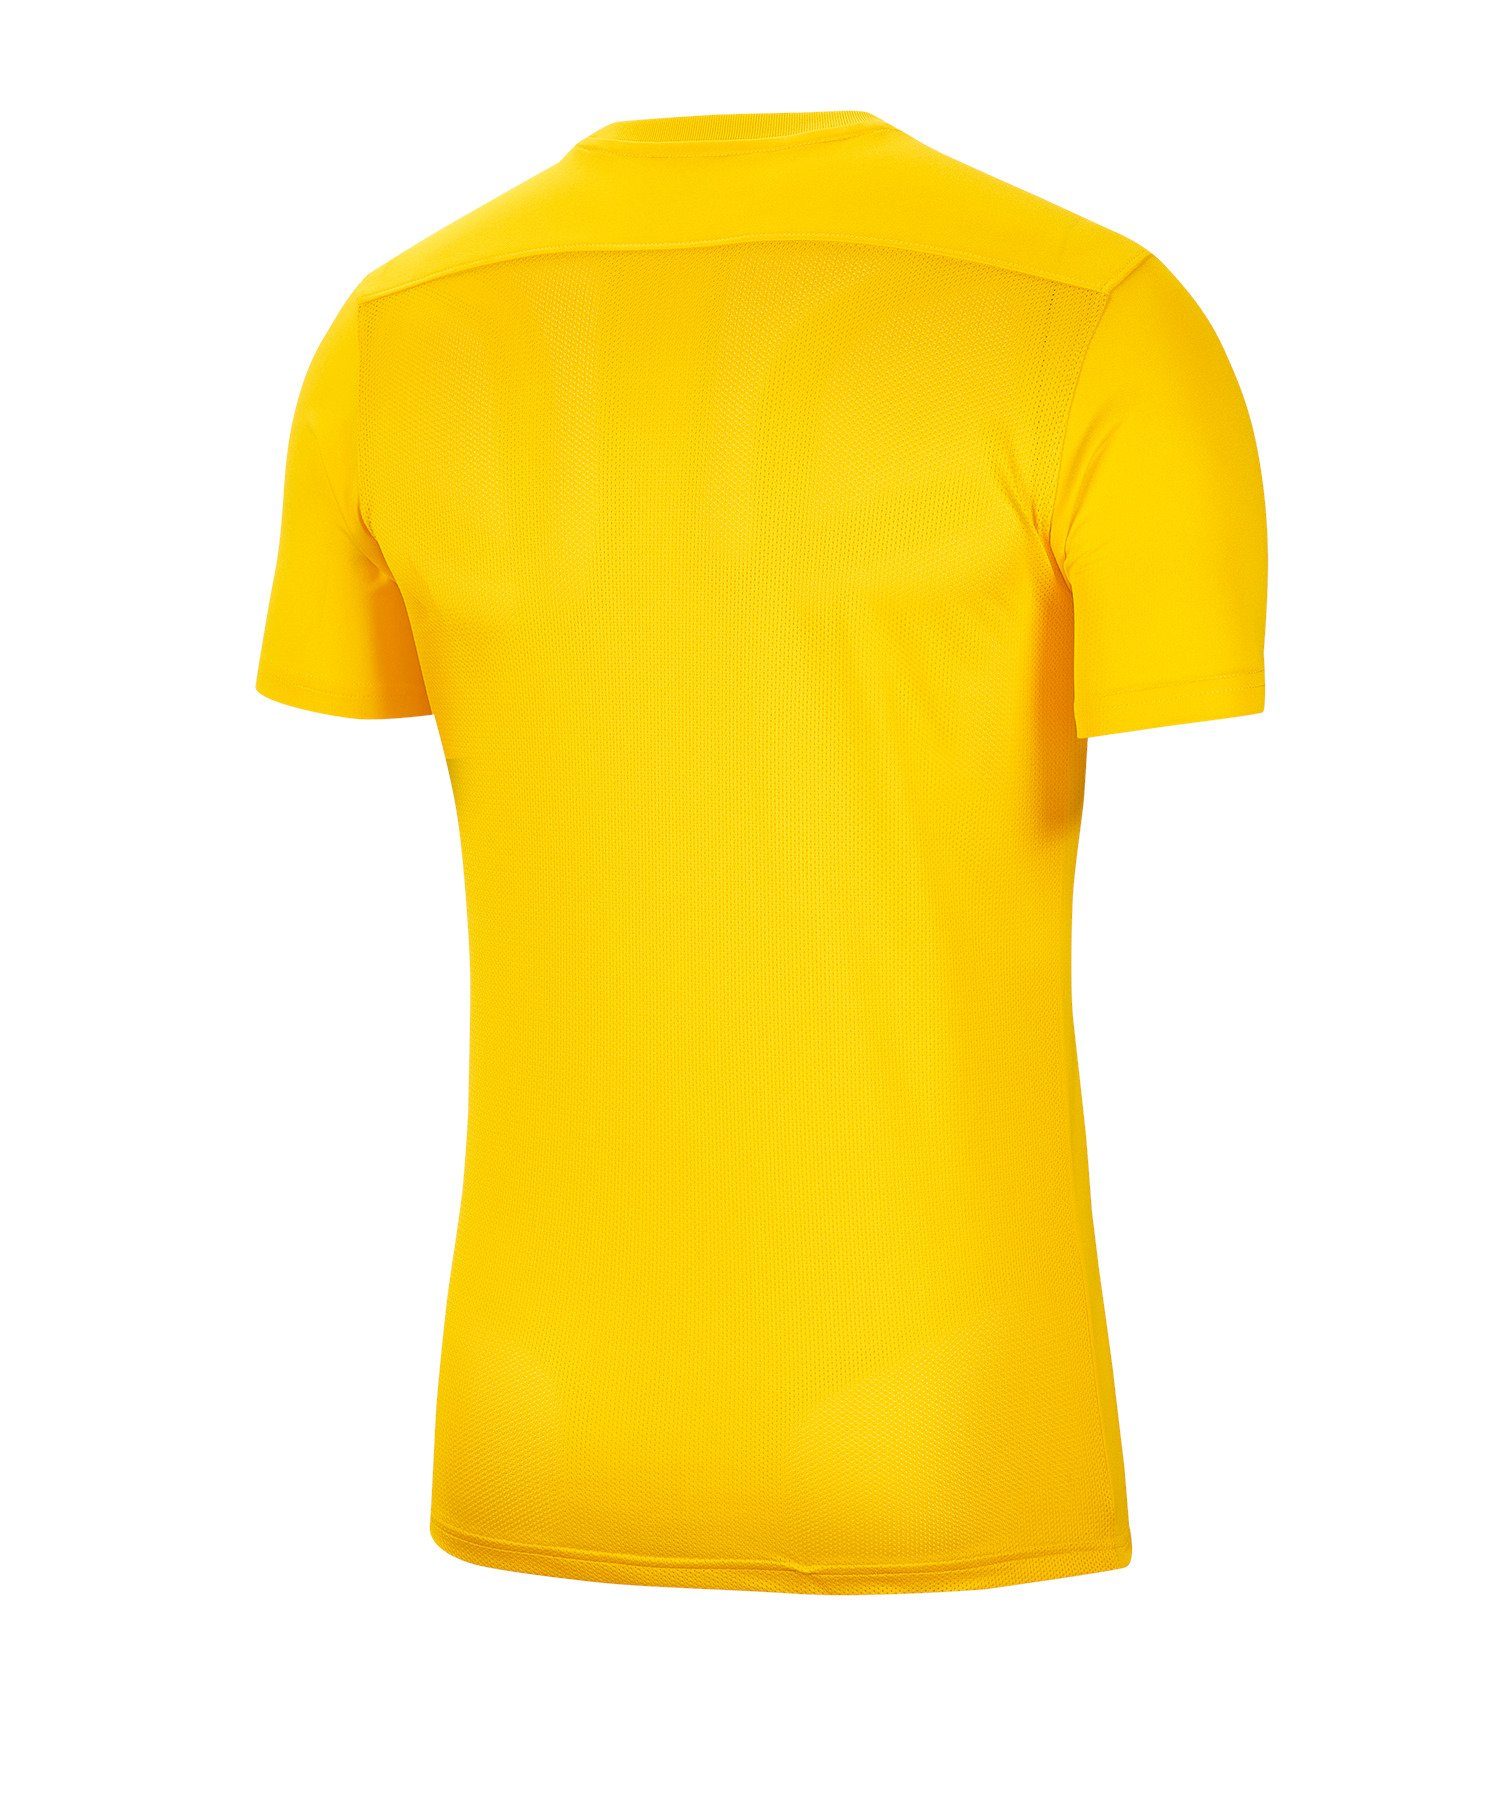 Nike Fußballtrikot Park VII Trikot kurzarm gelb